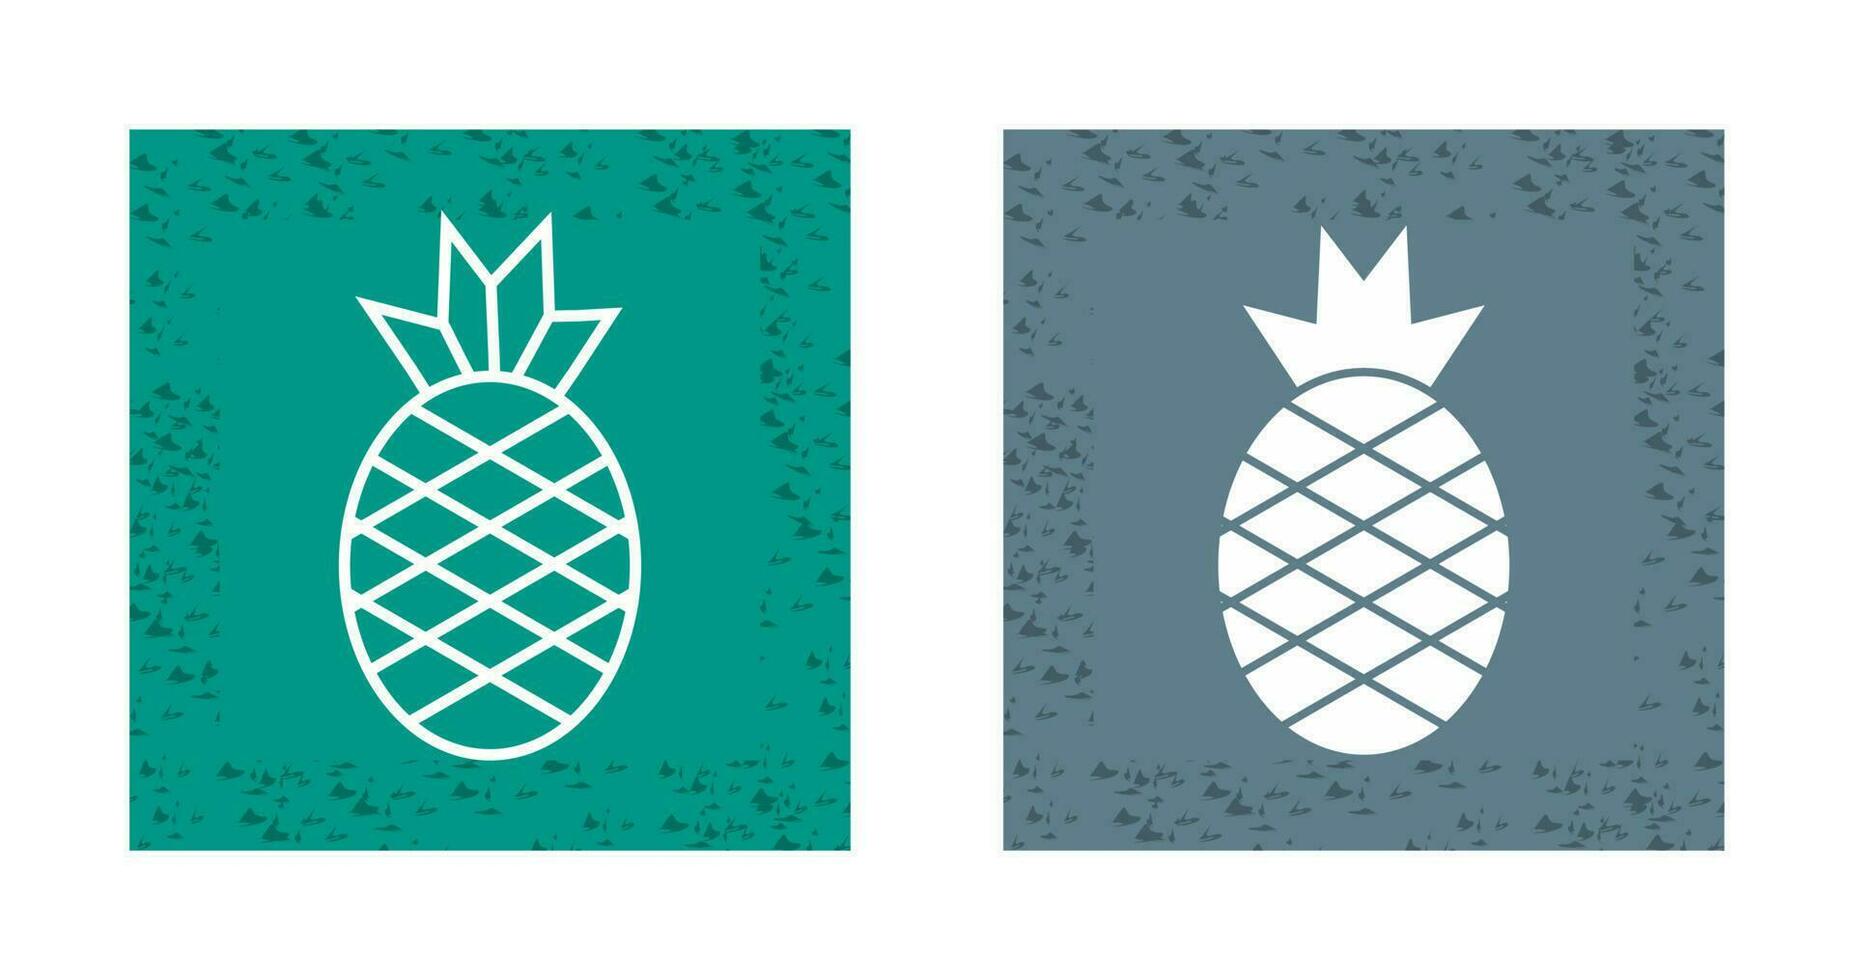 ícone de vetor de abacaxi